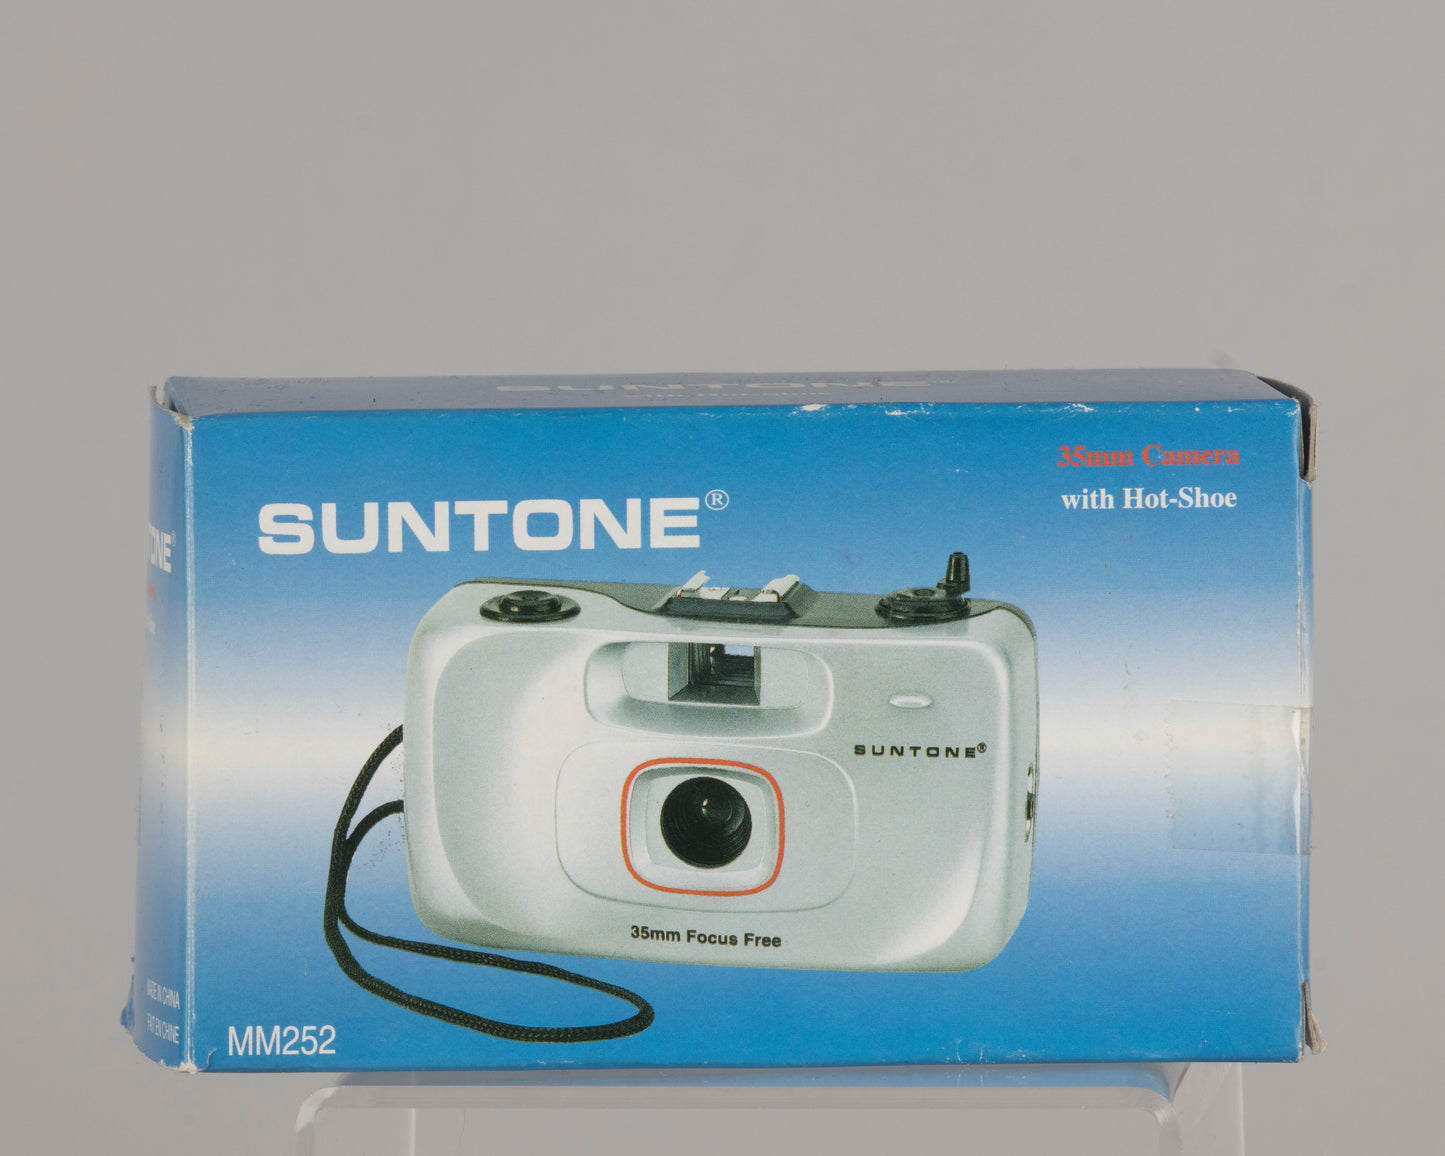 Suntone MM252 Focus Free 35mm film camera; includes original box and manual